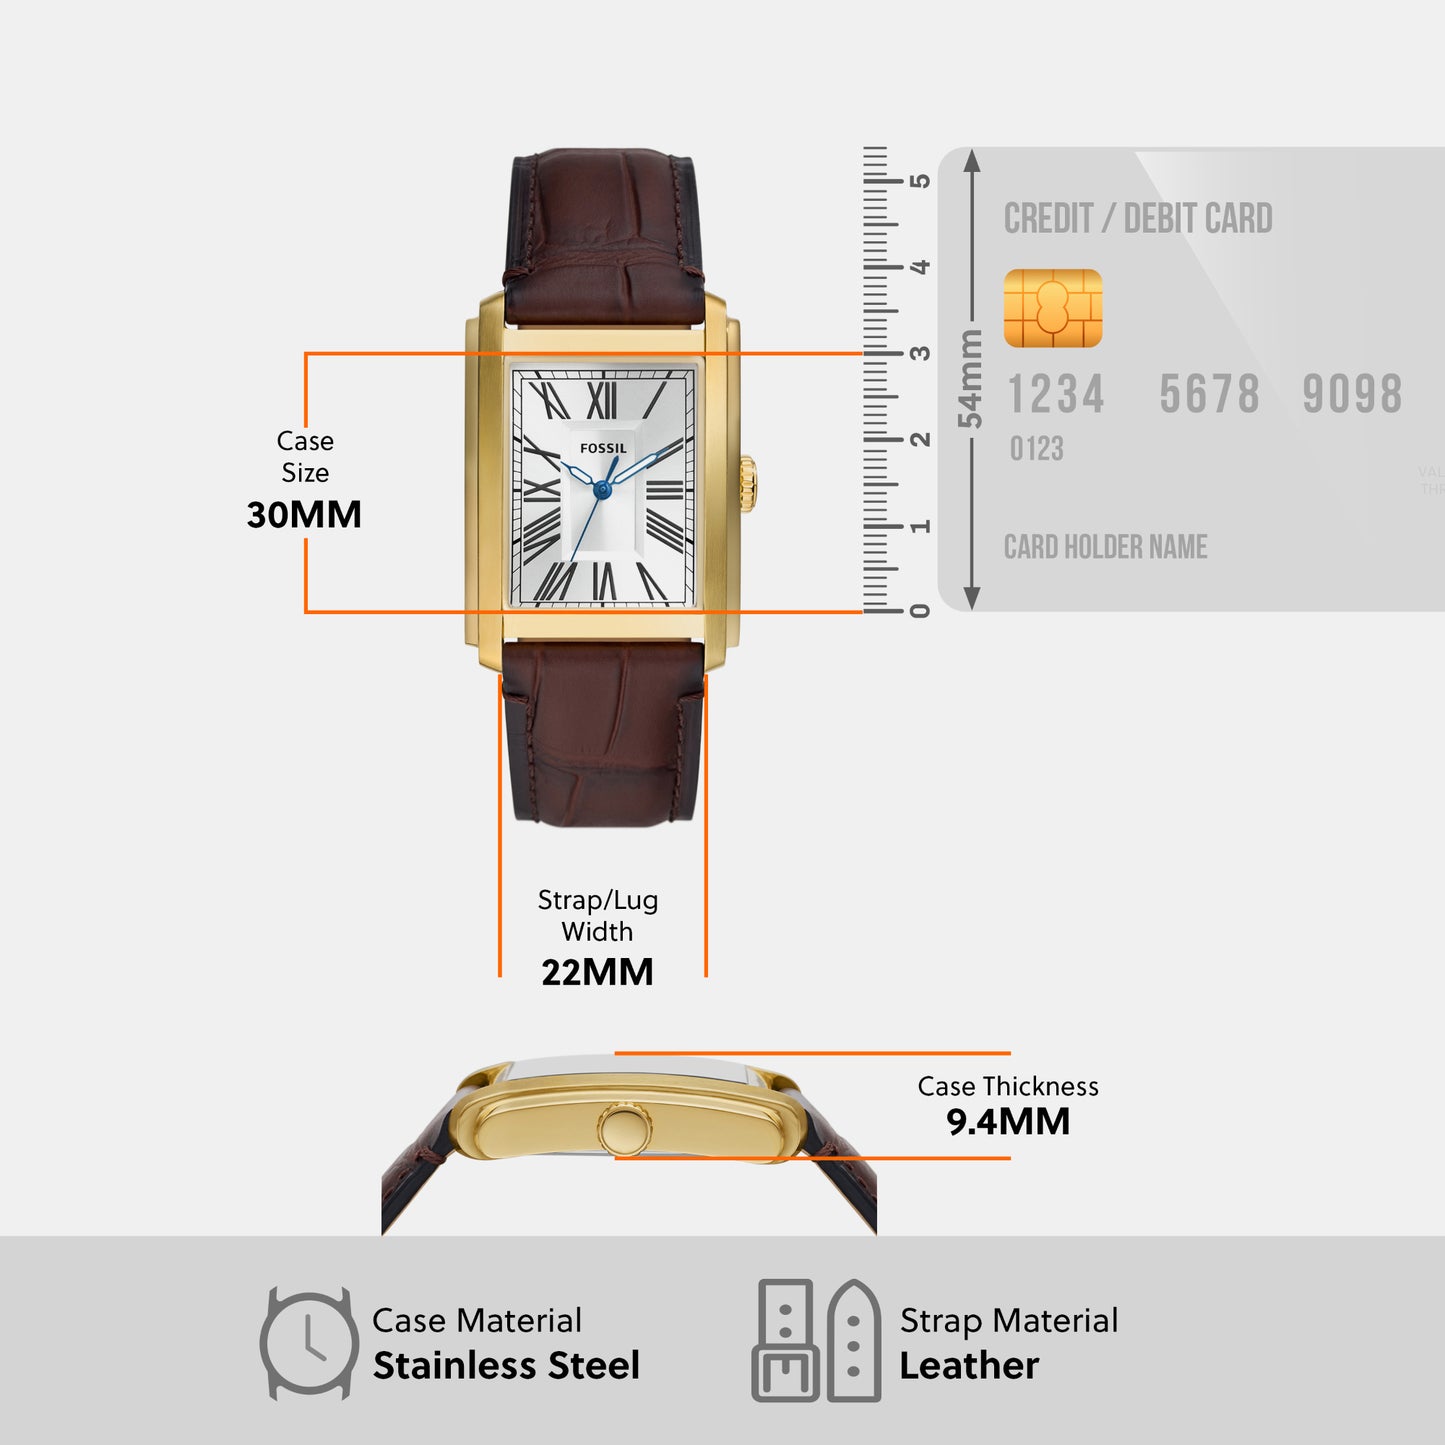 Male Carraway Three-Hand White Croco Leather Watch FS6011